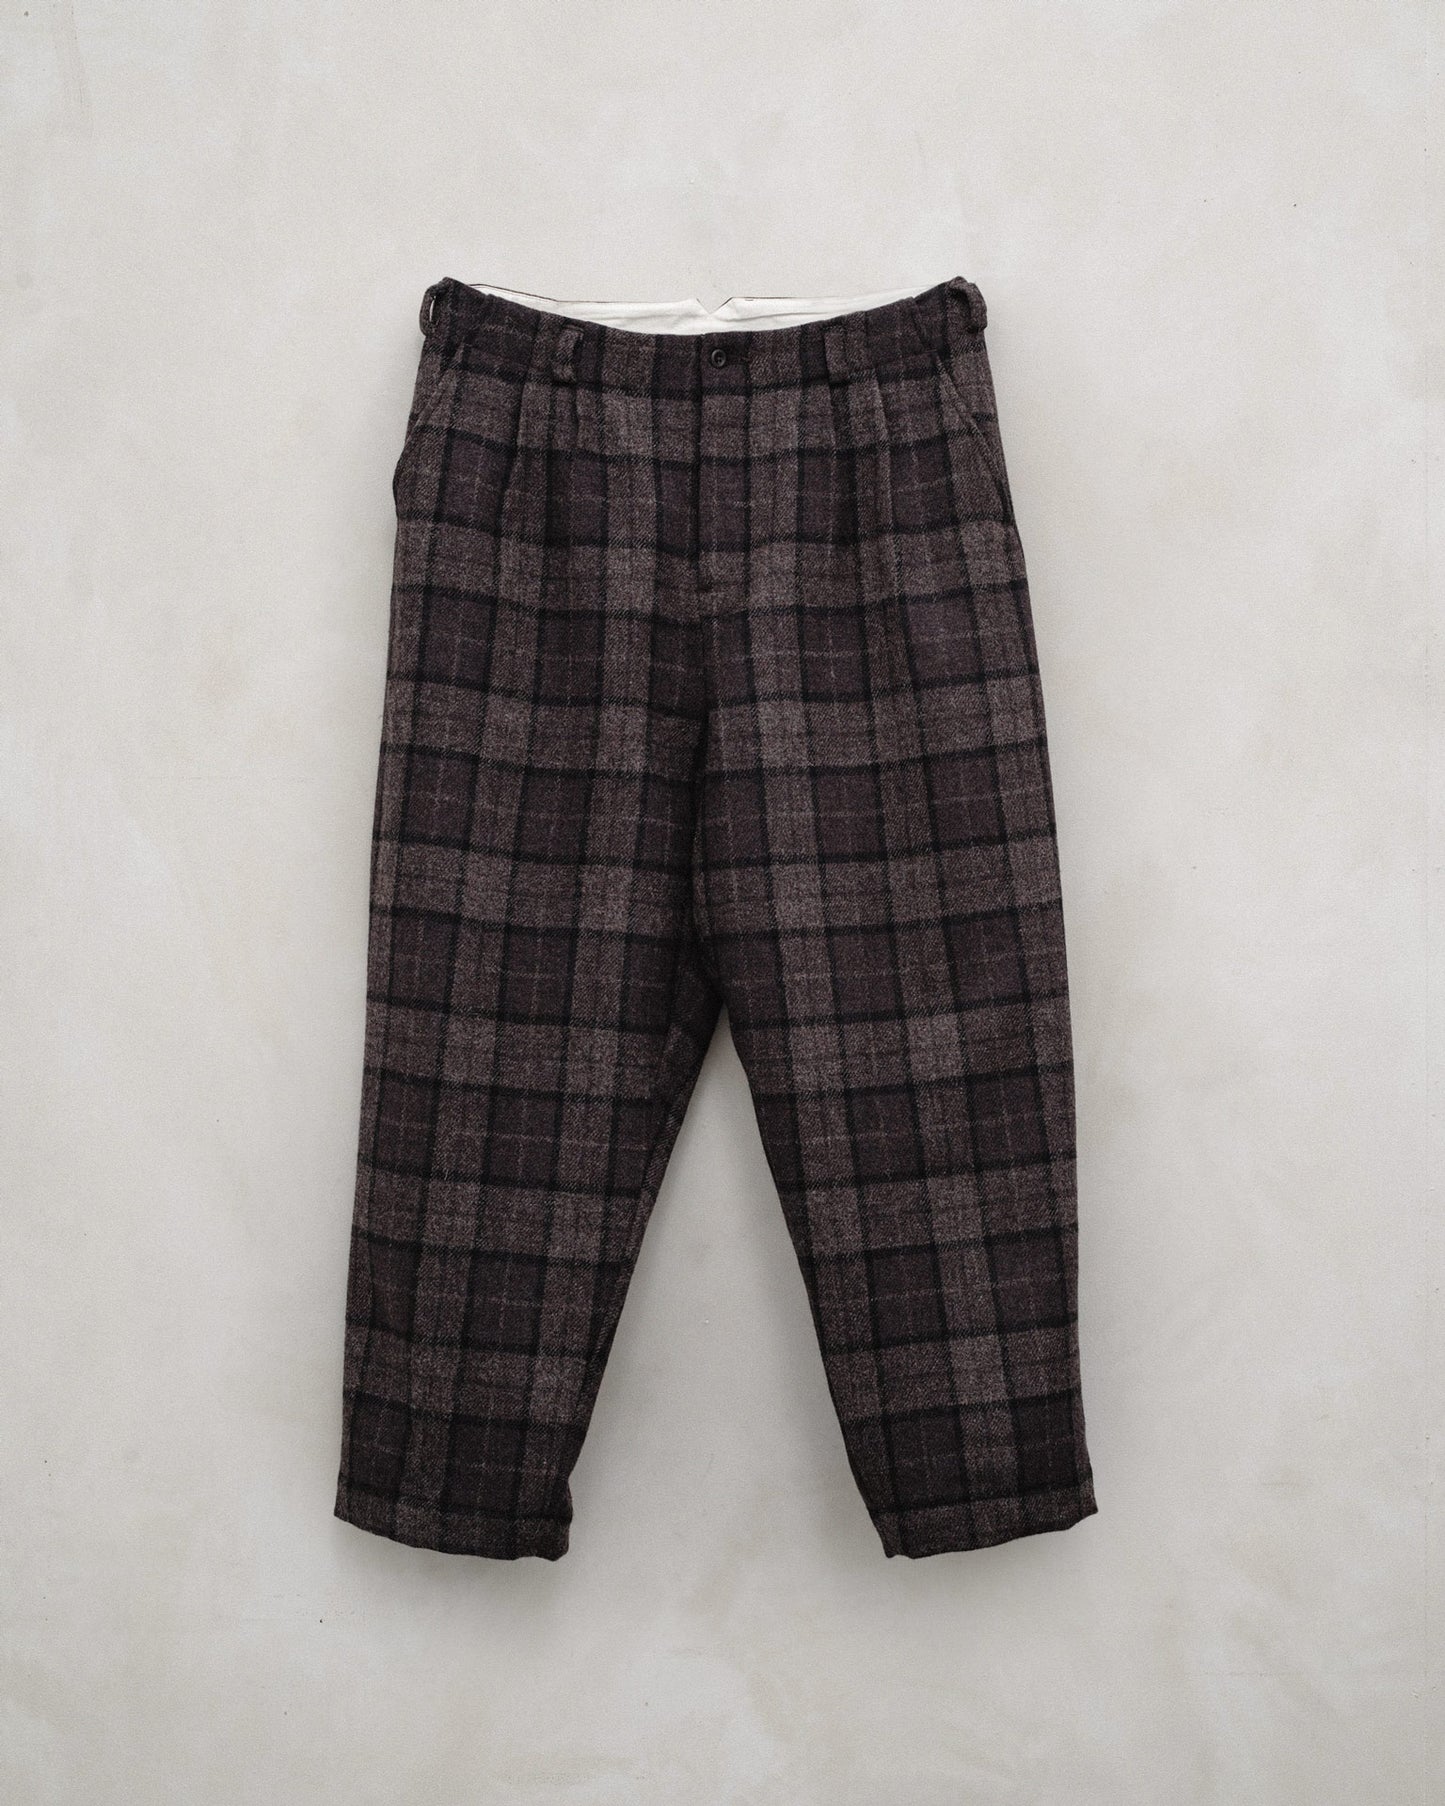 Two Pleat Pant - Fox Tweed Check, Brown/Grey/Black